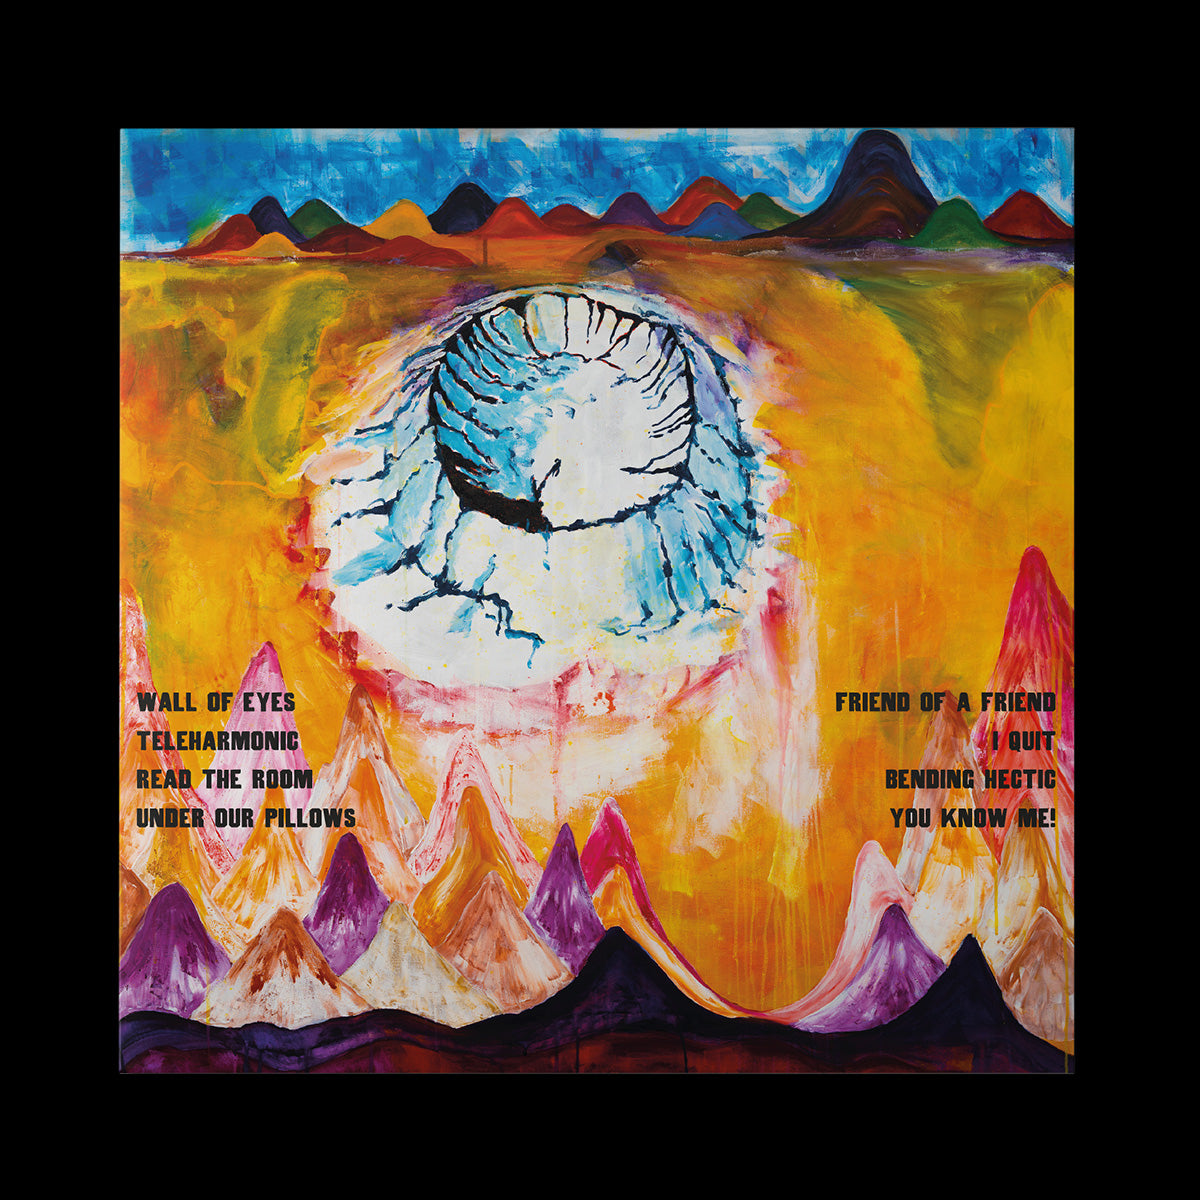 The Smile - Wall Of Eyes: Vinyl LP